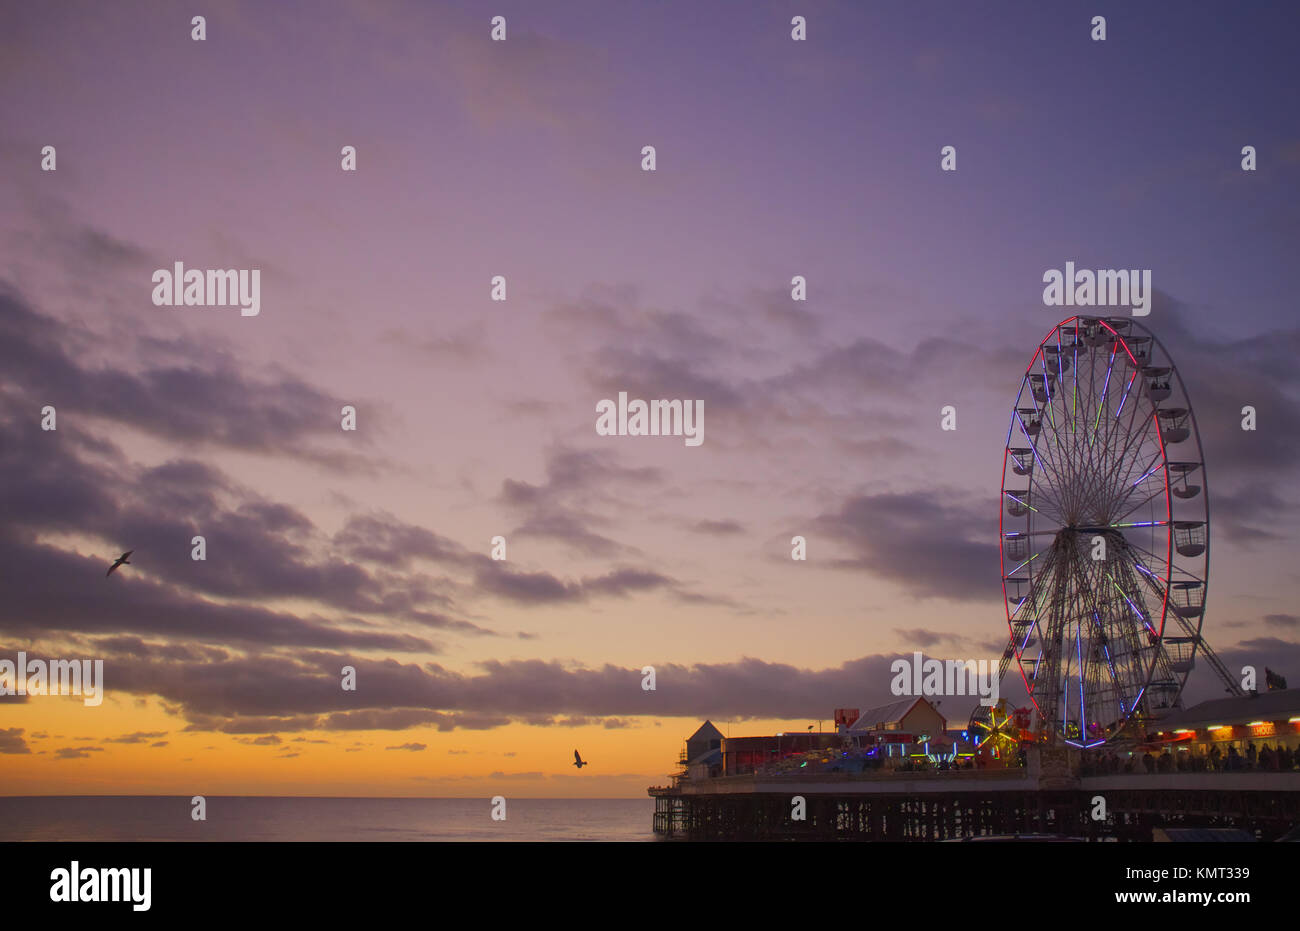 Illuminated Big wheel ride on Central Pier at Blackpool illuminations 2017 Stock Photo